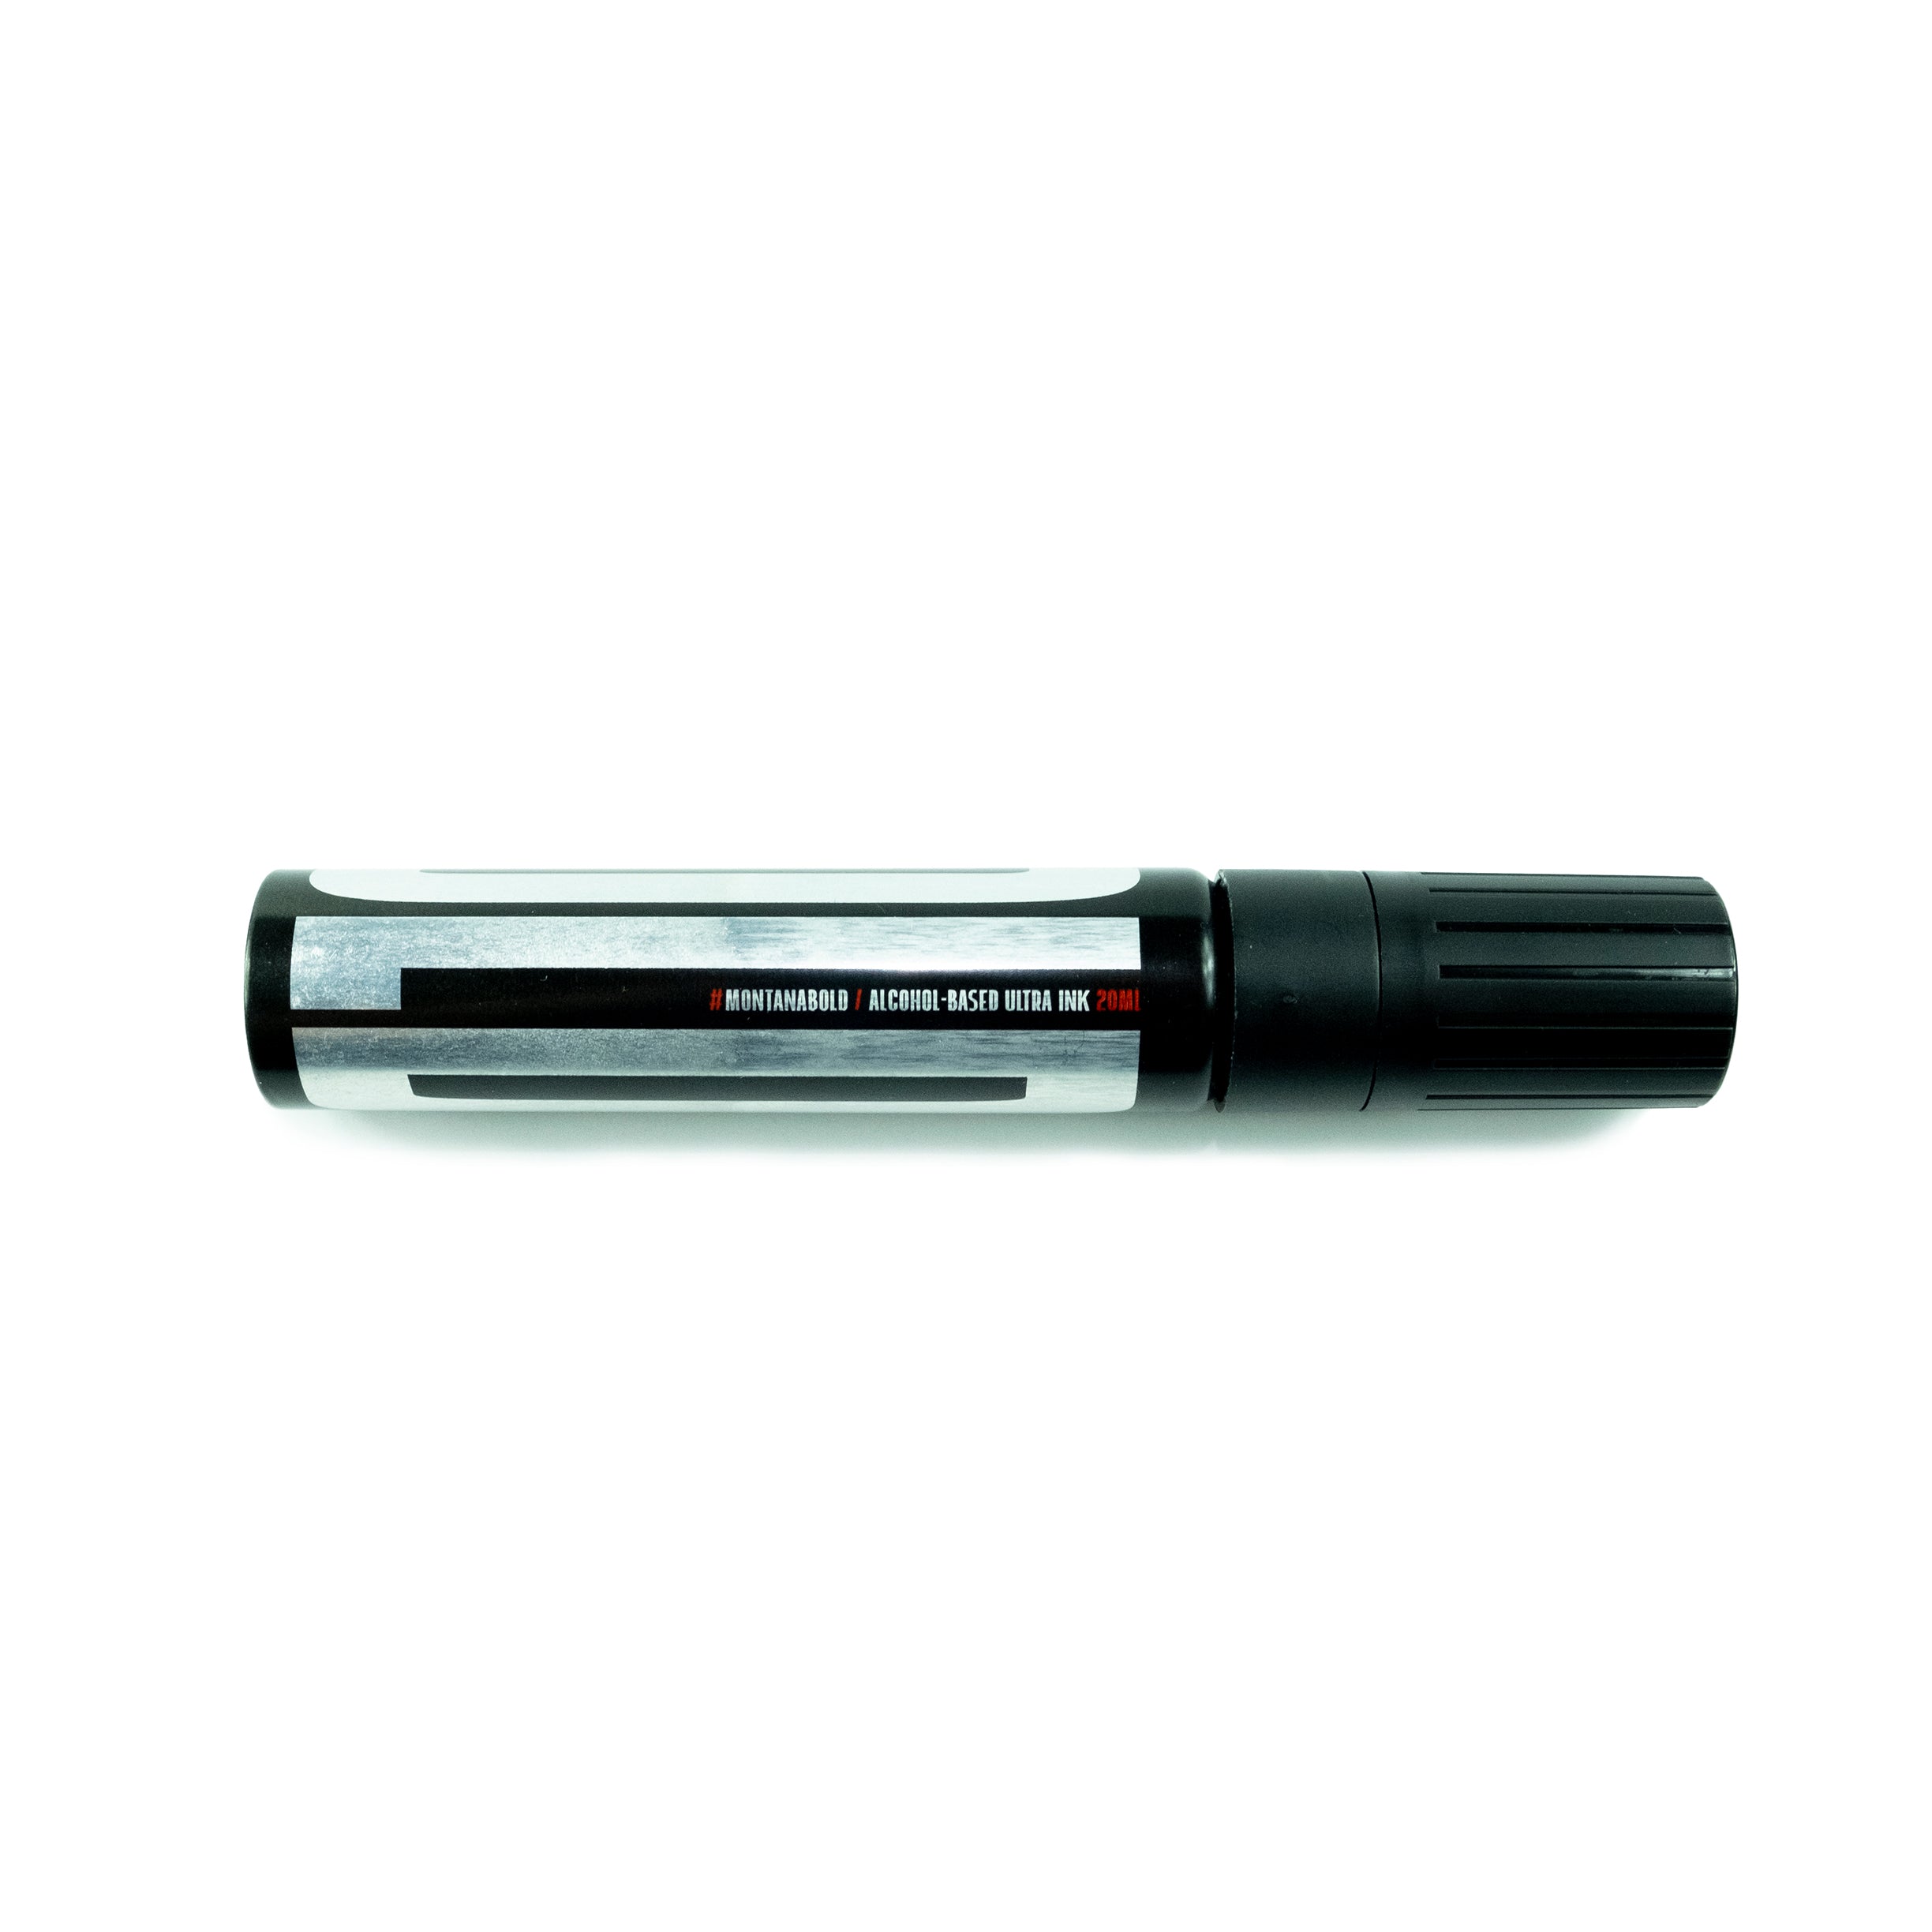 Tooli-Art Paint Pens Acrylic Markers 30 Set 0.7mm Algeria